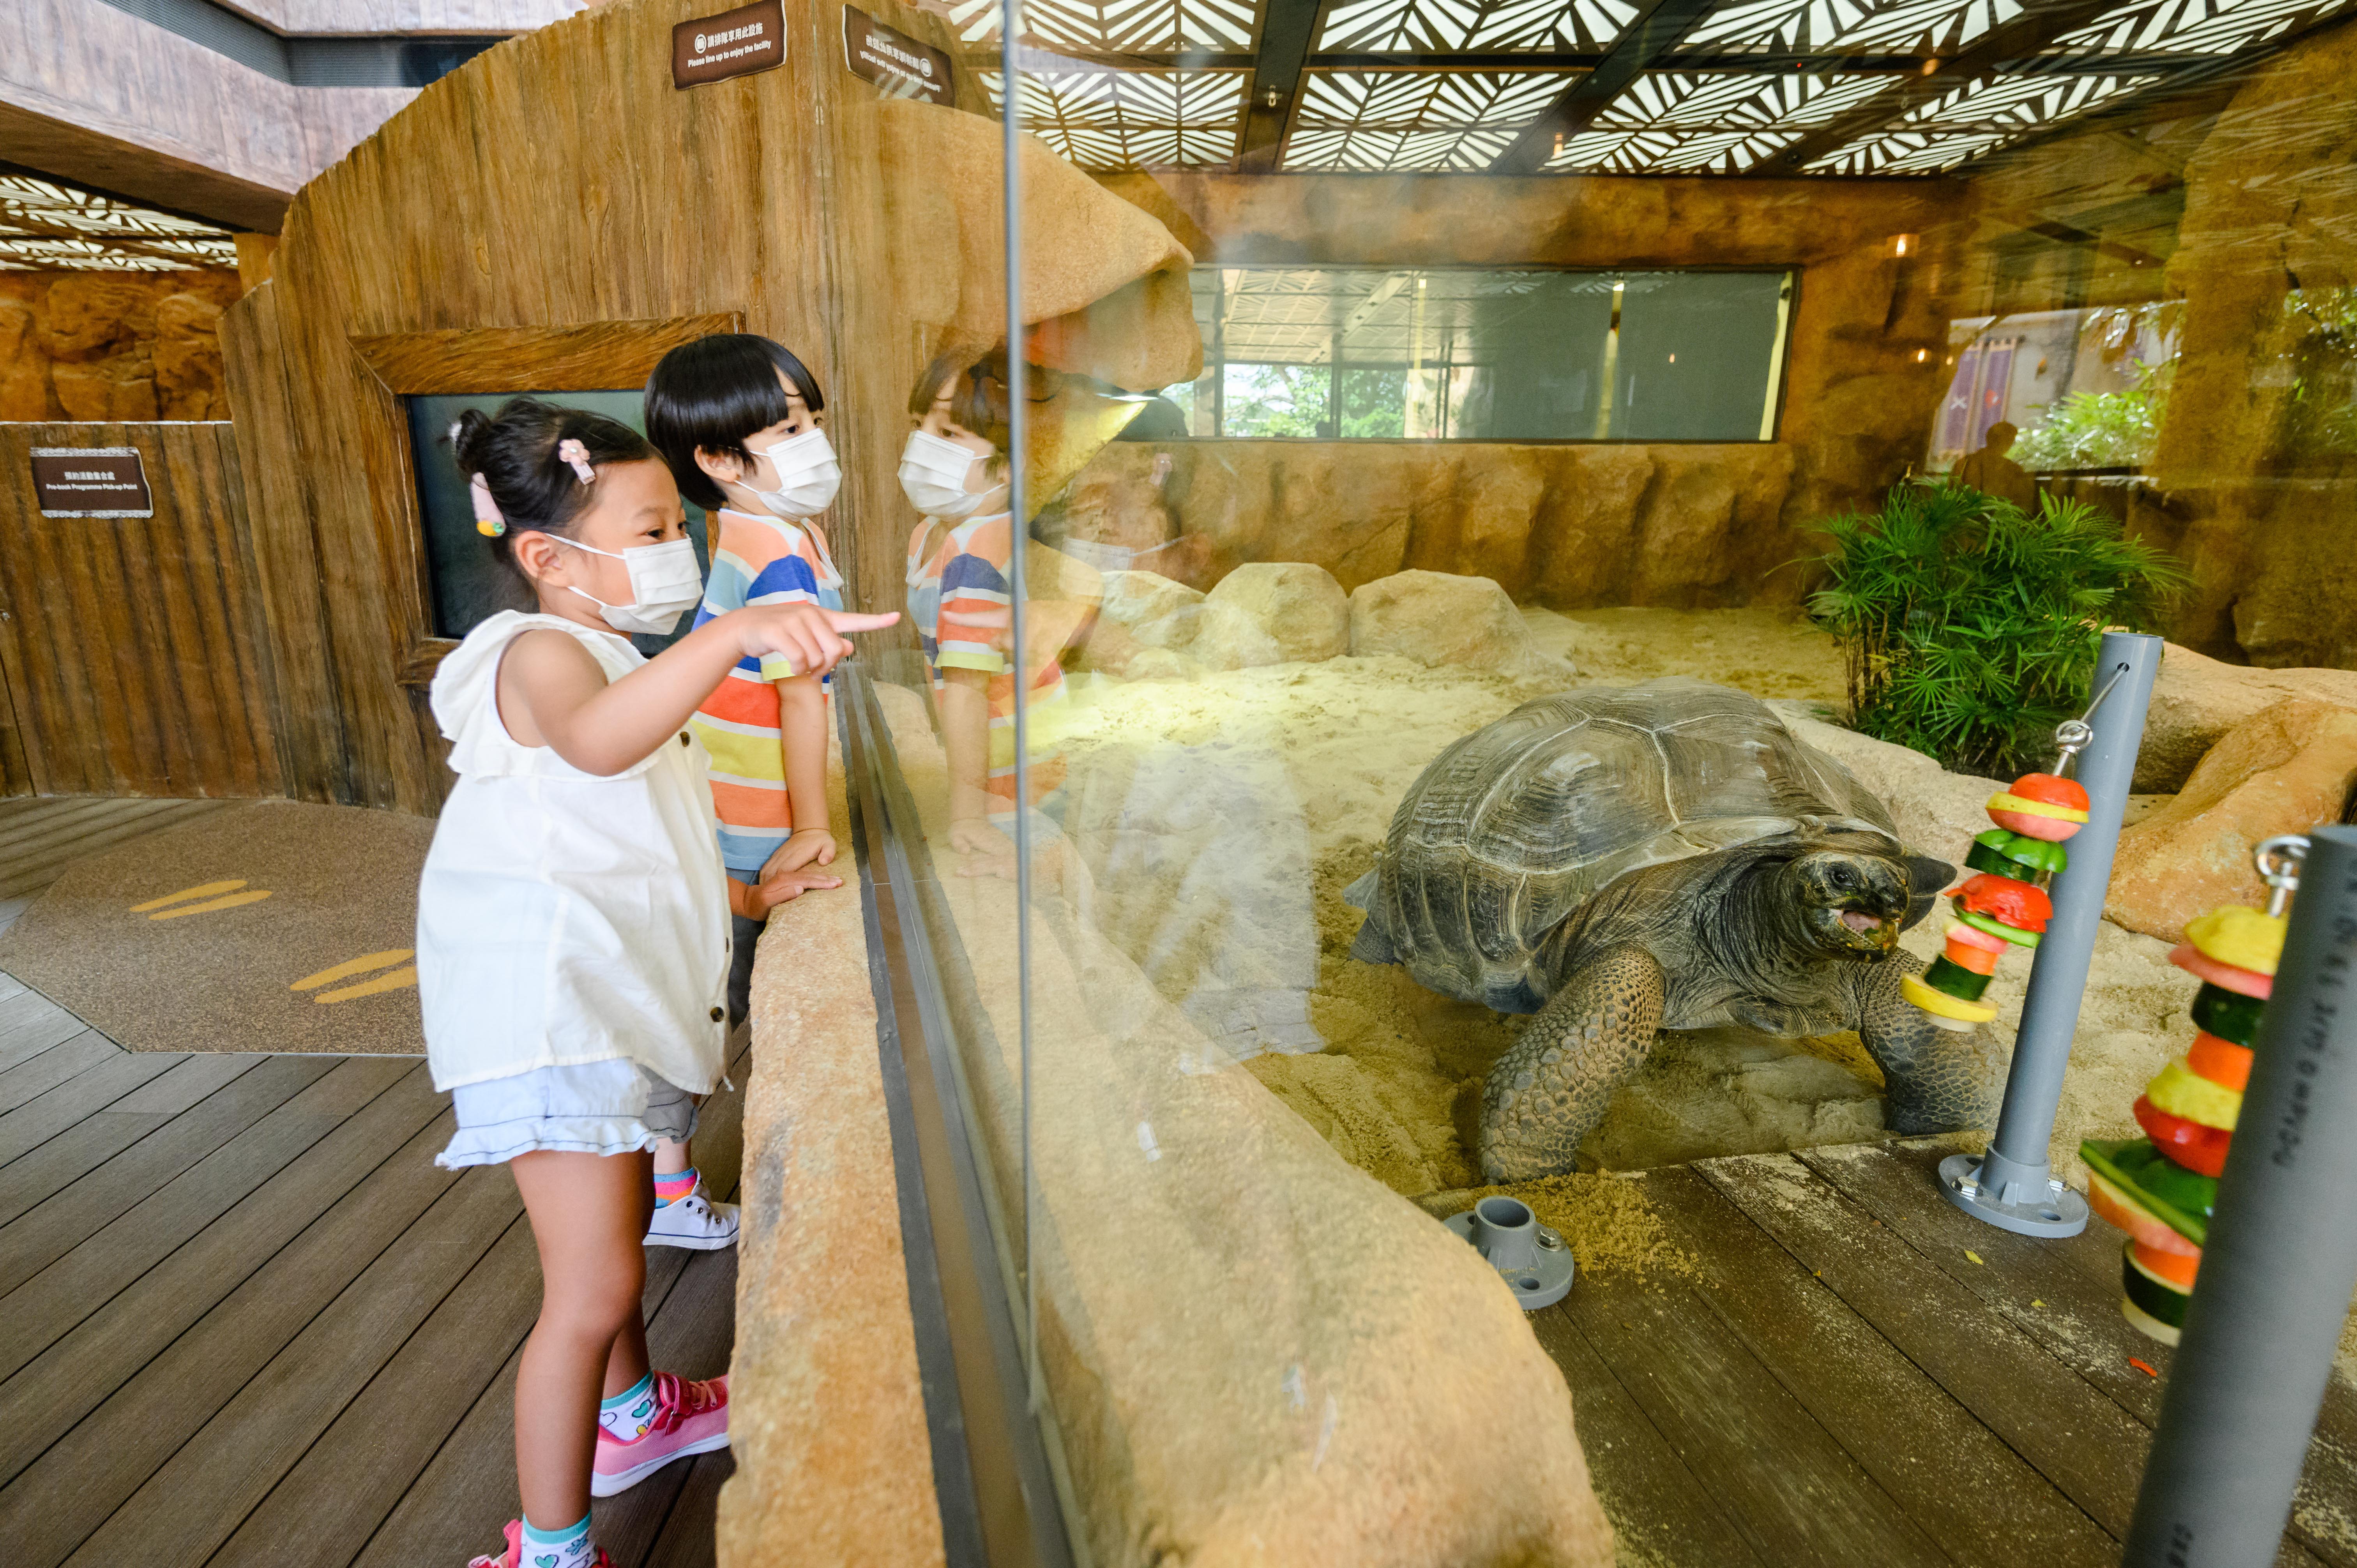 Explorer different exhibits, including Little Meerkat and Giant Tortoise Adventure, to understand how animals adapt to their habitats